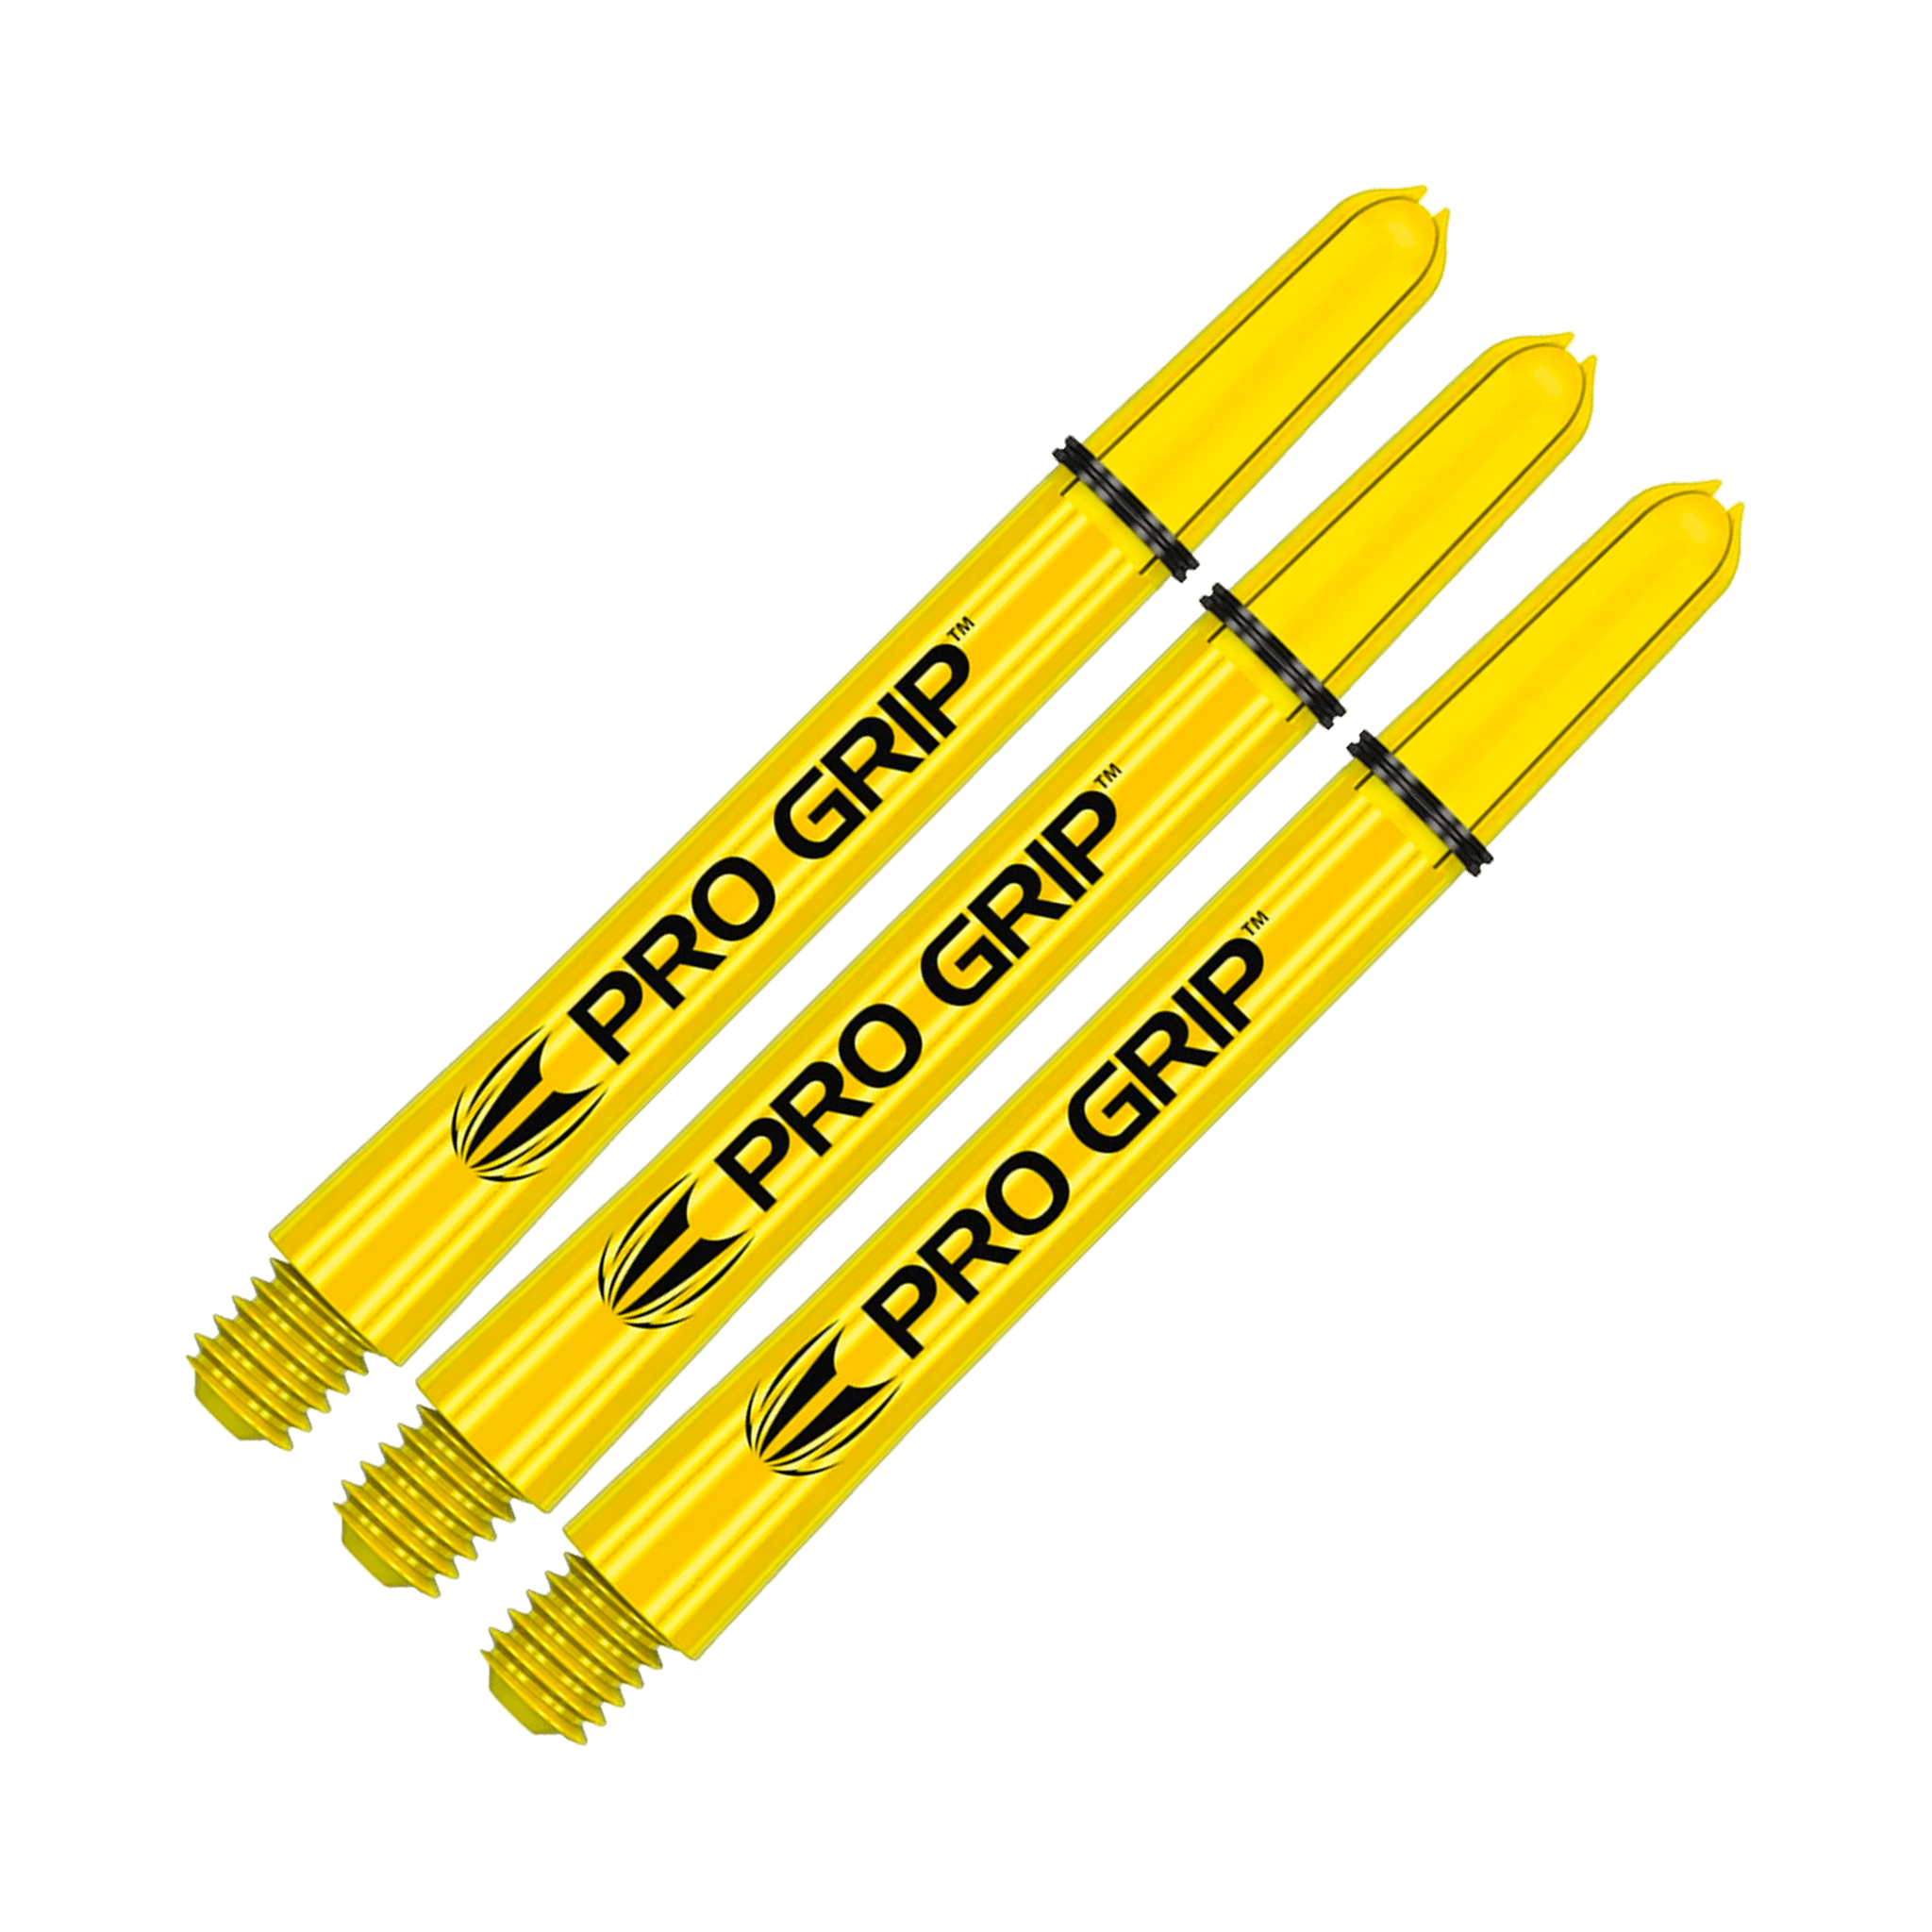 Target Pro Grip - Nylon Dart Shafts Yellow / Medium (48mm) Shafts